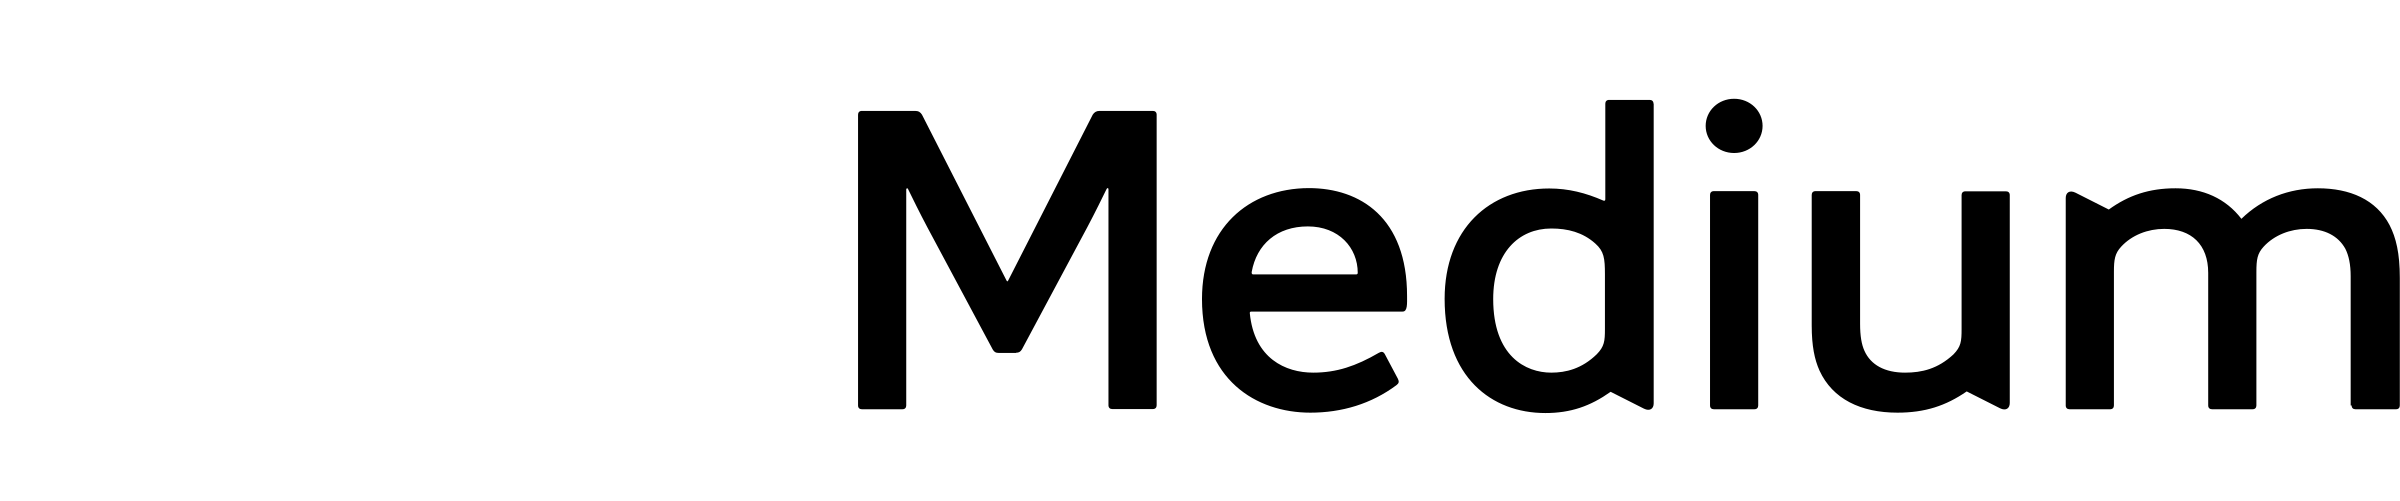 Medium Logo Black And White - Medium (2400x501), Png Download